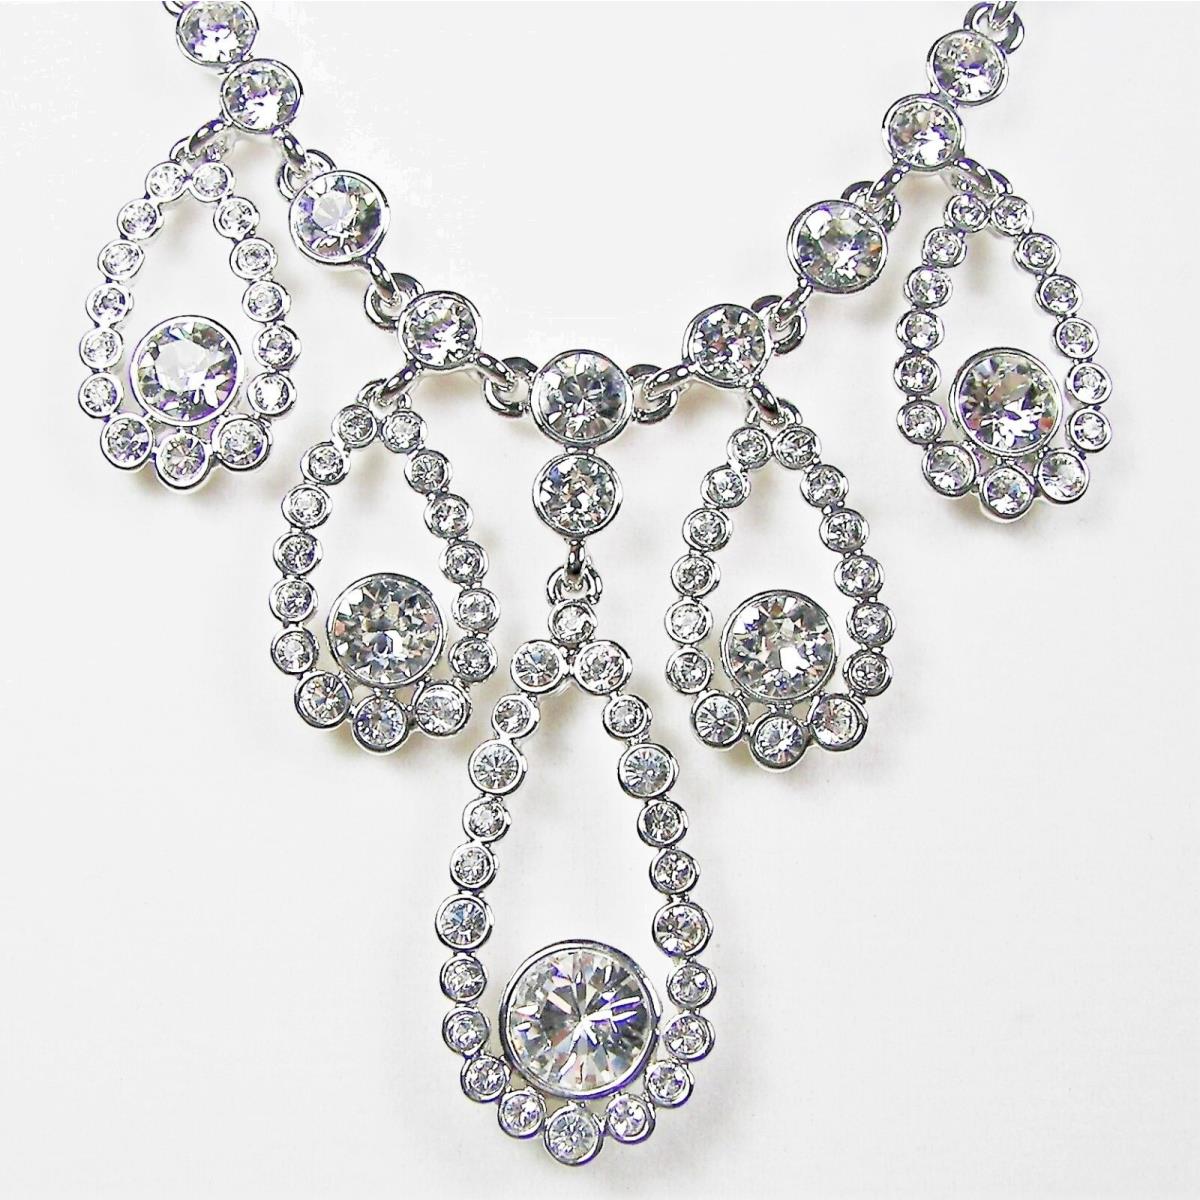 Givenchy Swarovski Crystal Teardrop Necklace Silver Tone Chain Party Sparkle